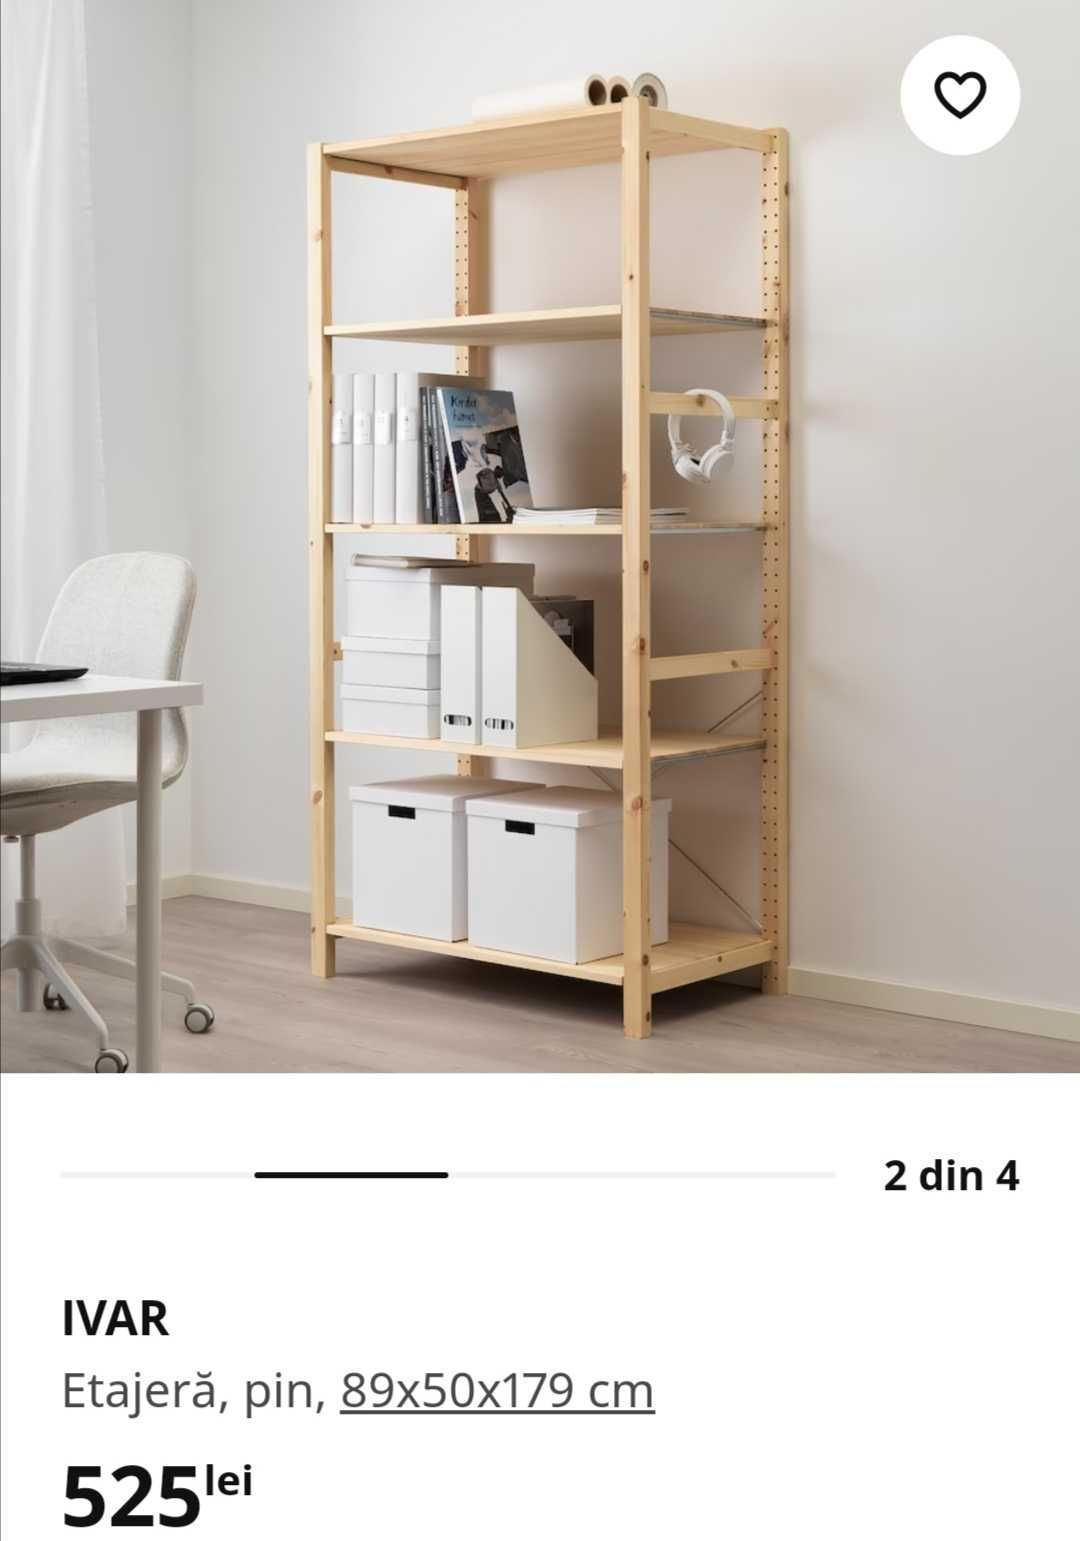 Etajera pin Ivar IKEA rafturi lemn